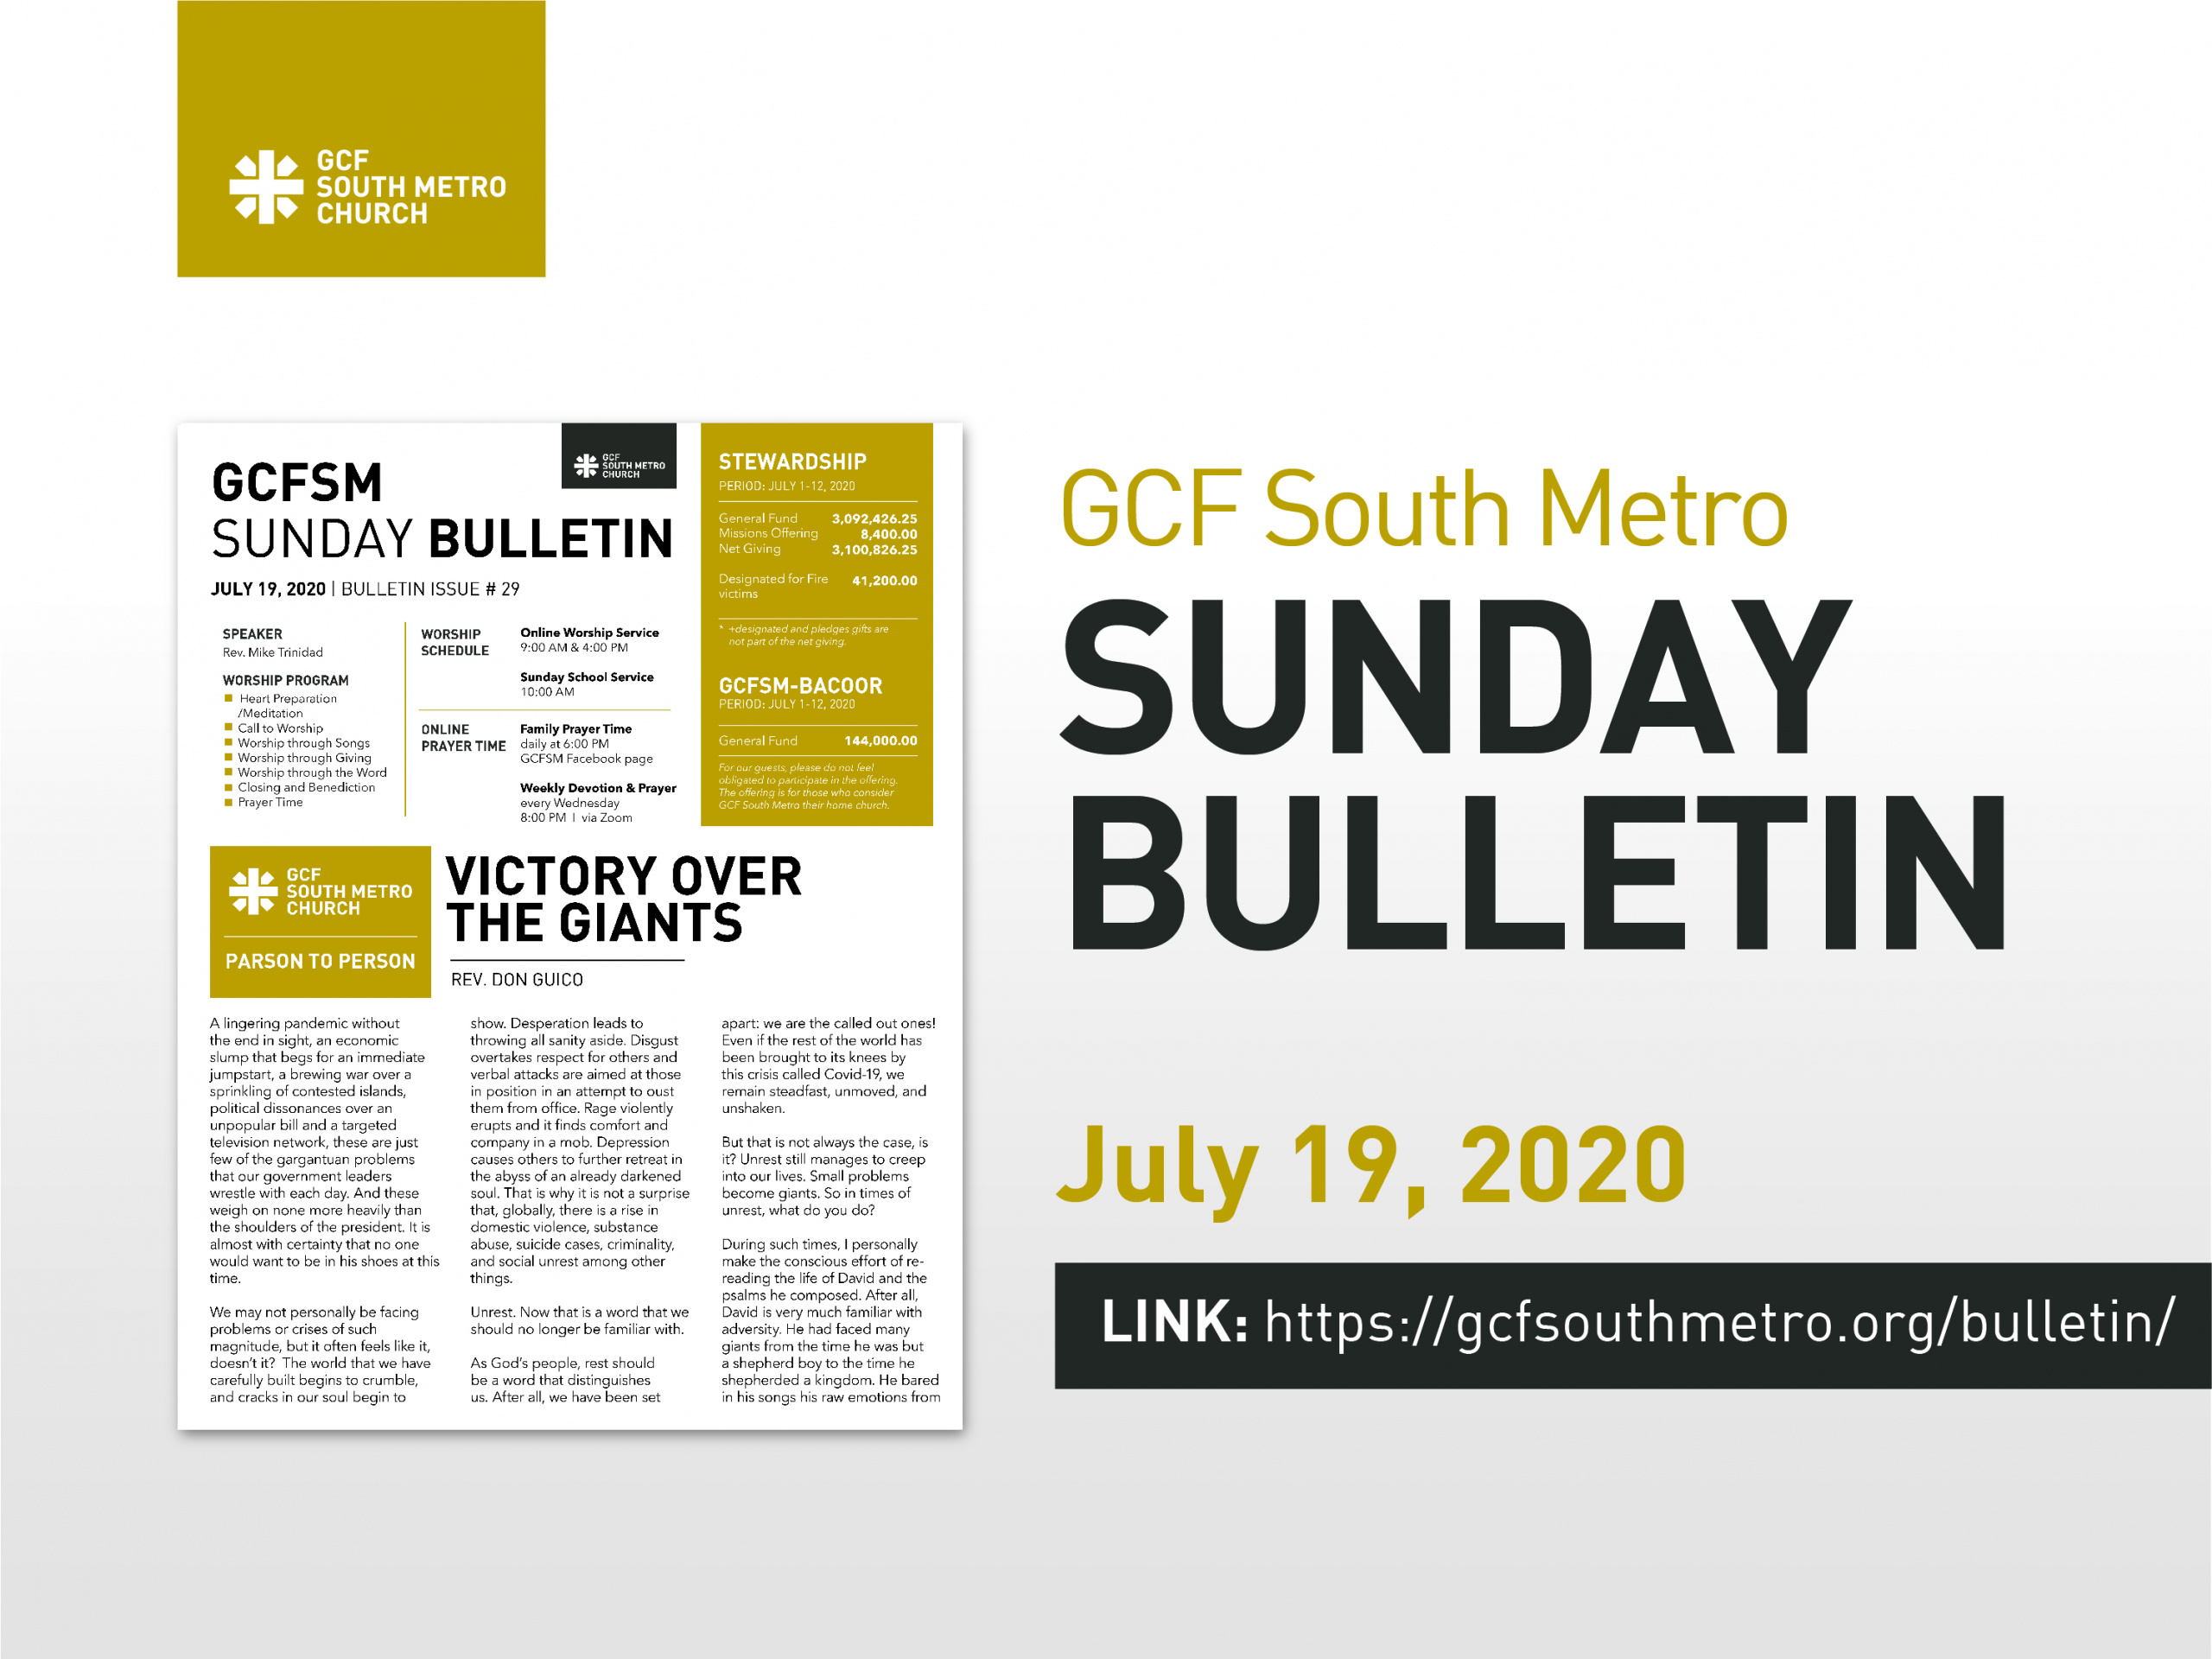 Sunday Bulletin, July 19, 2020